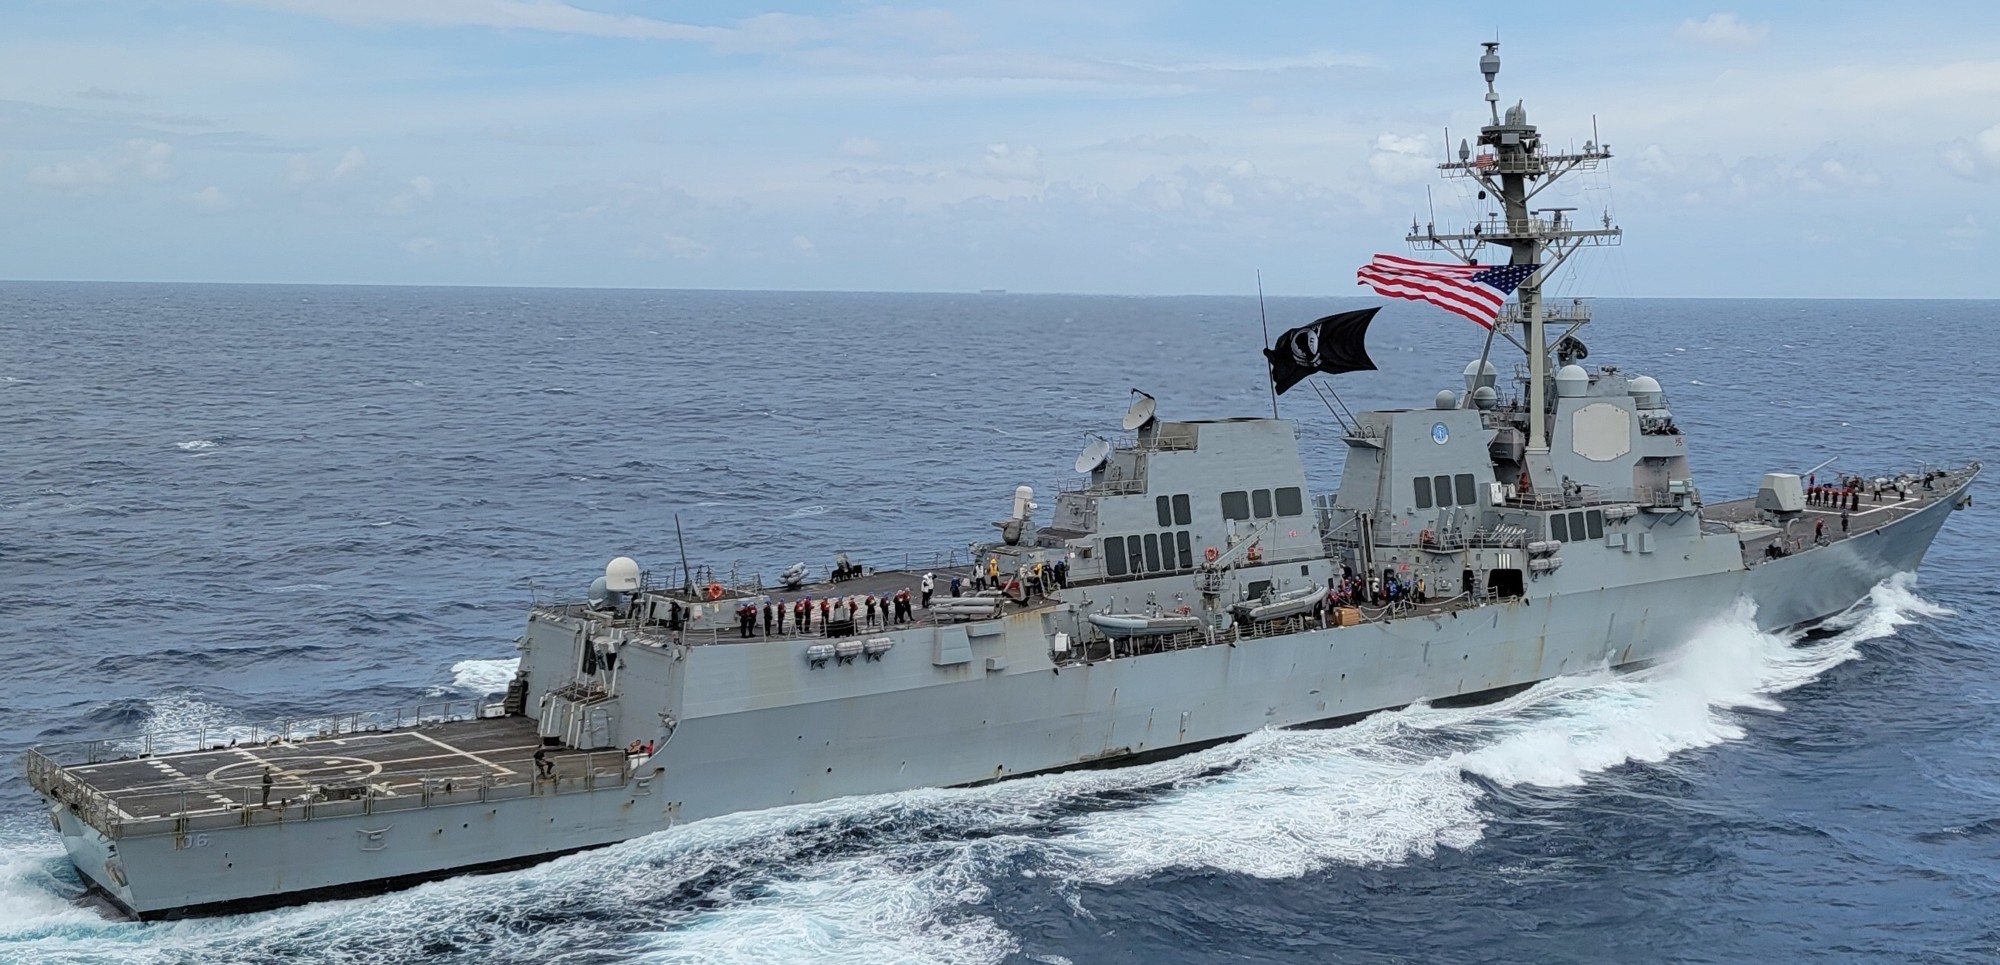 ddg-106 uss stockdale arleigh burke class guided missile destroyer aegis us navy pacific ocean 143